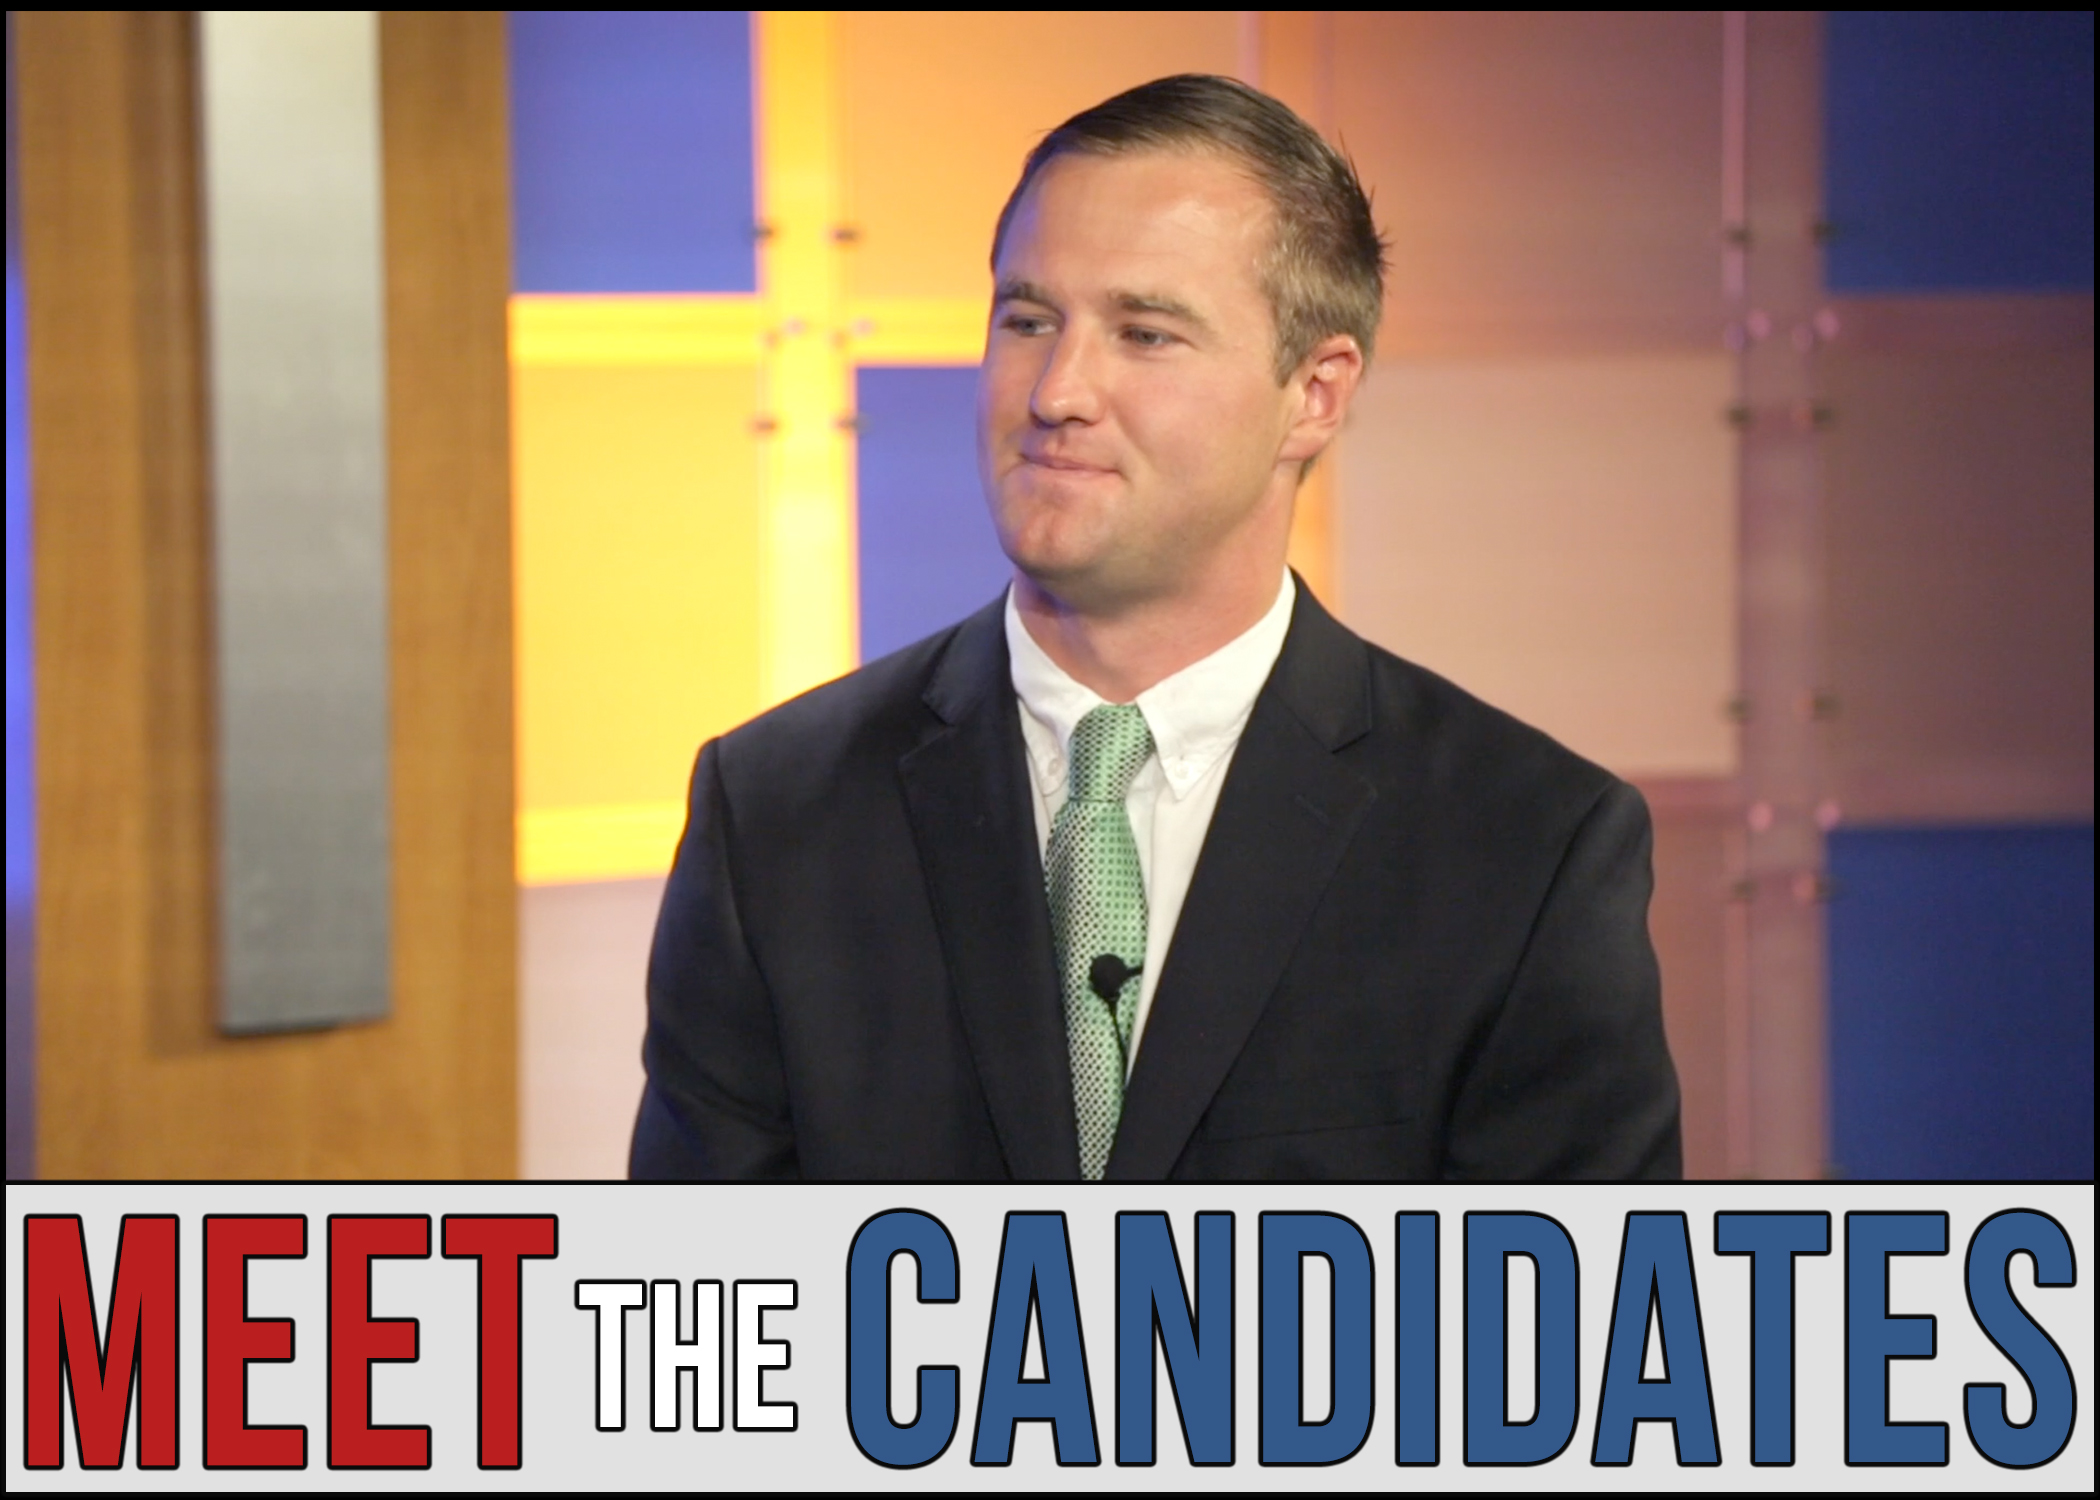 Meet the Candidates - Patrick Kearney